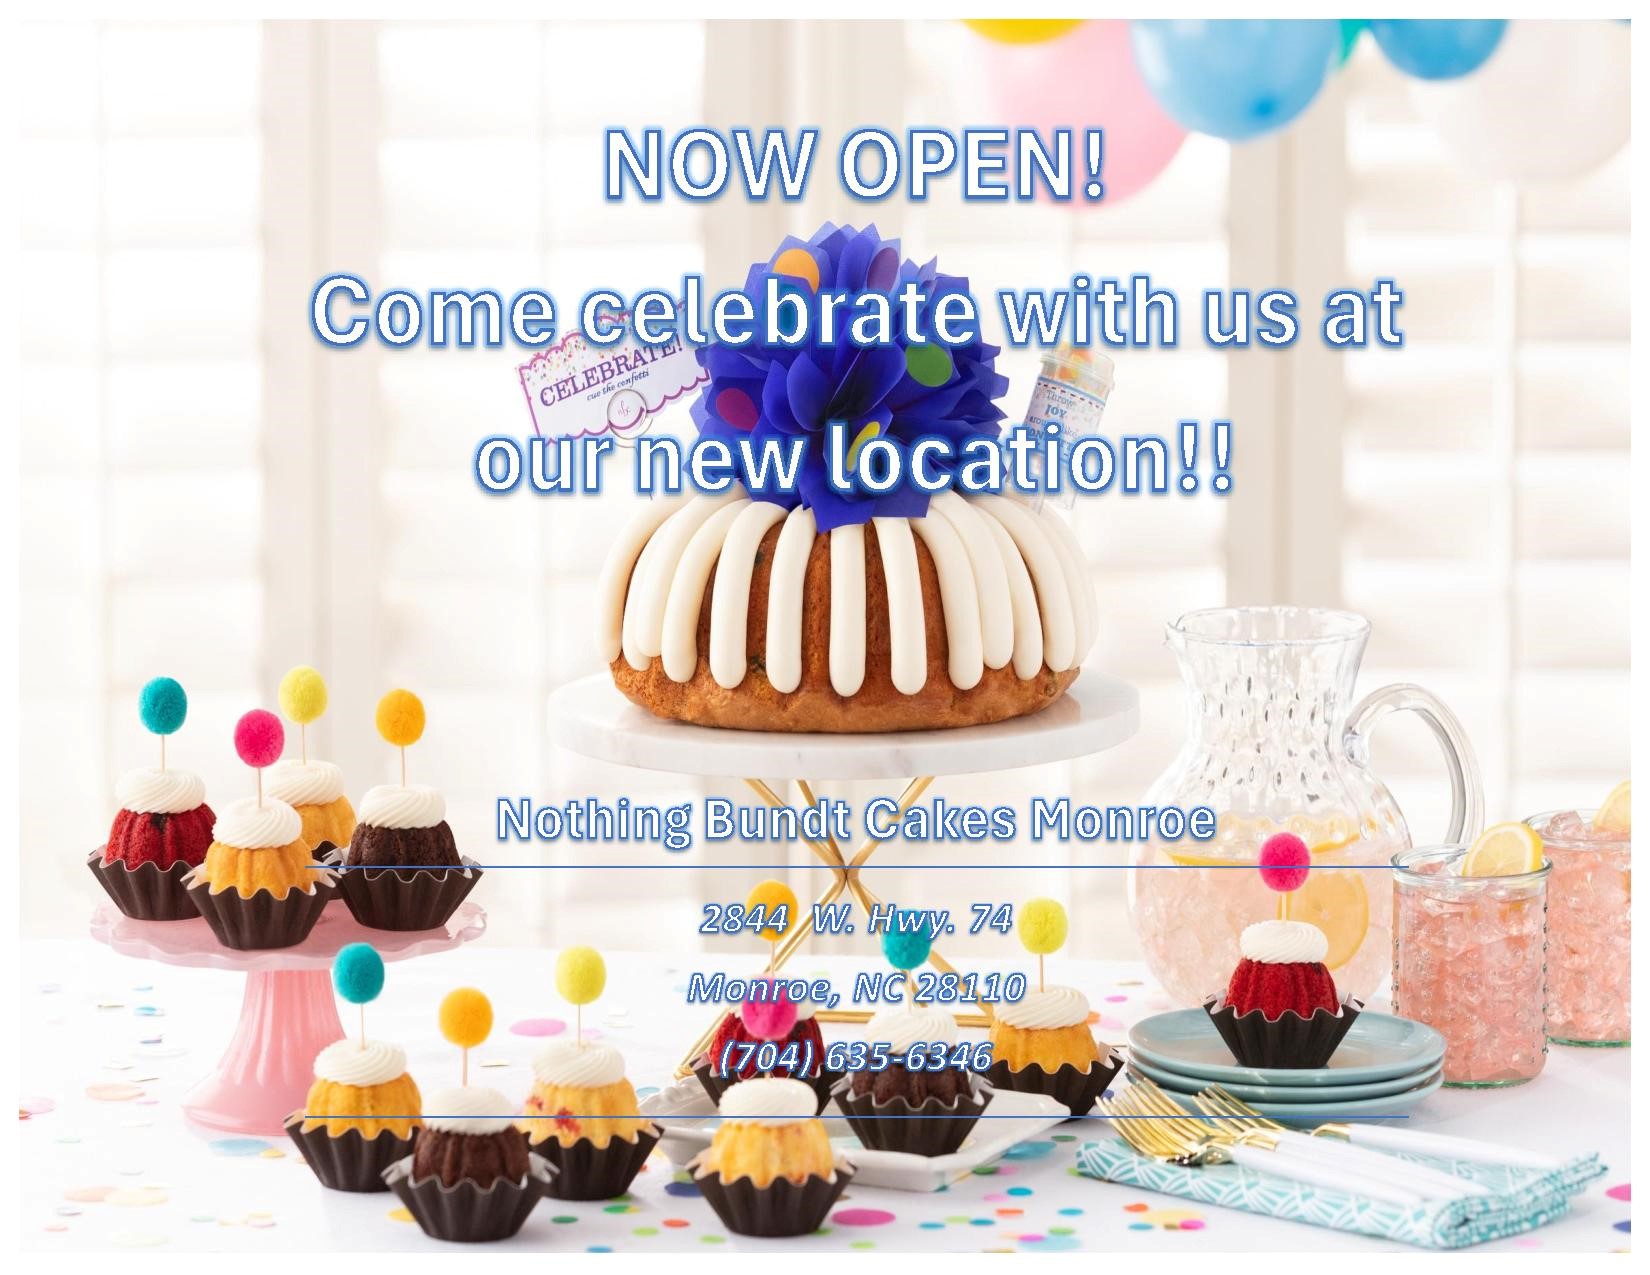 Nothing Bundt Cakes - Monroe Blog Ad Now Open in Monroe